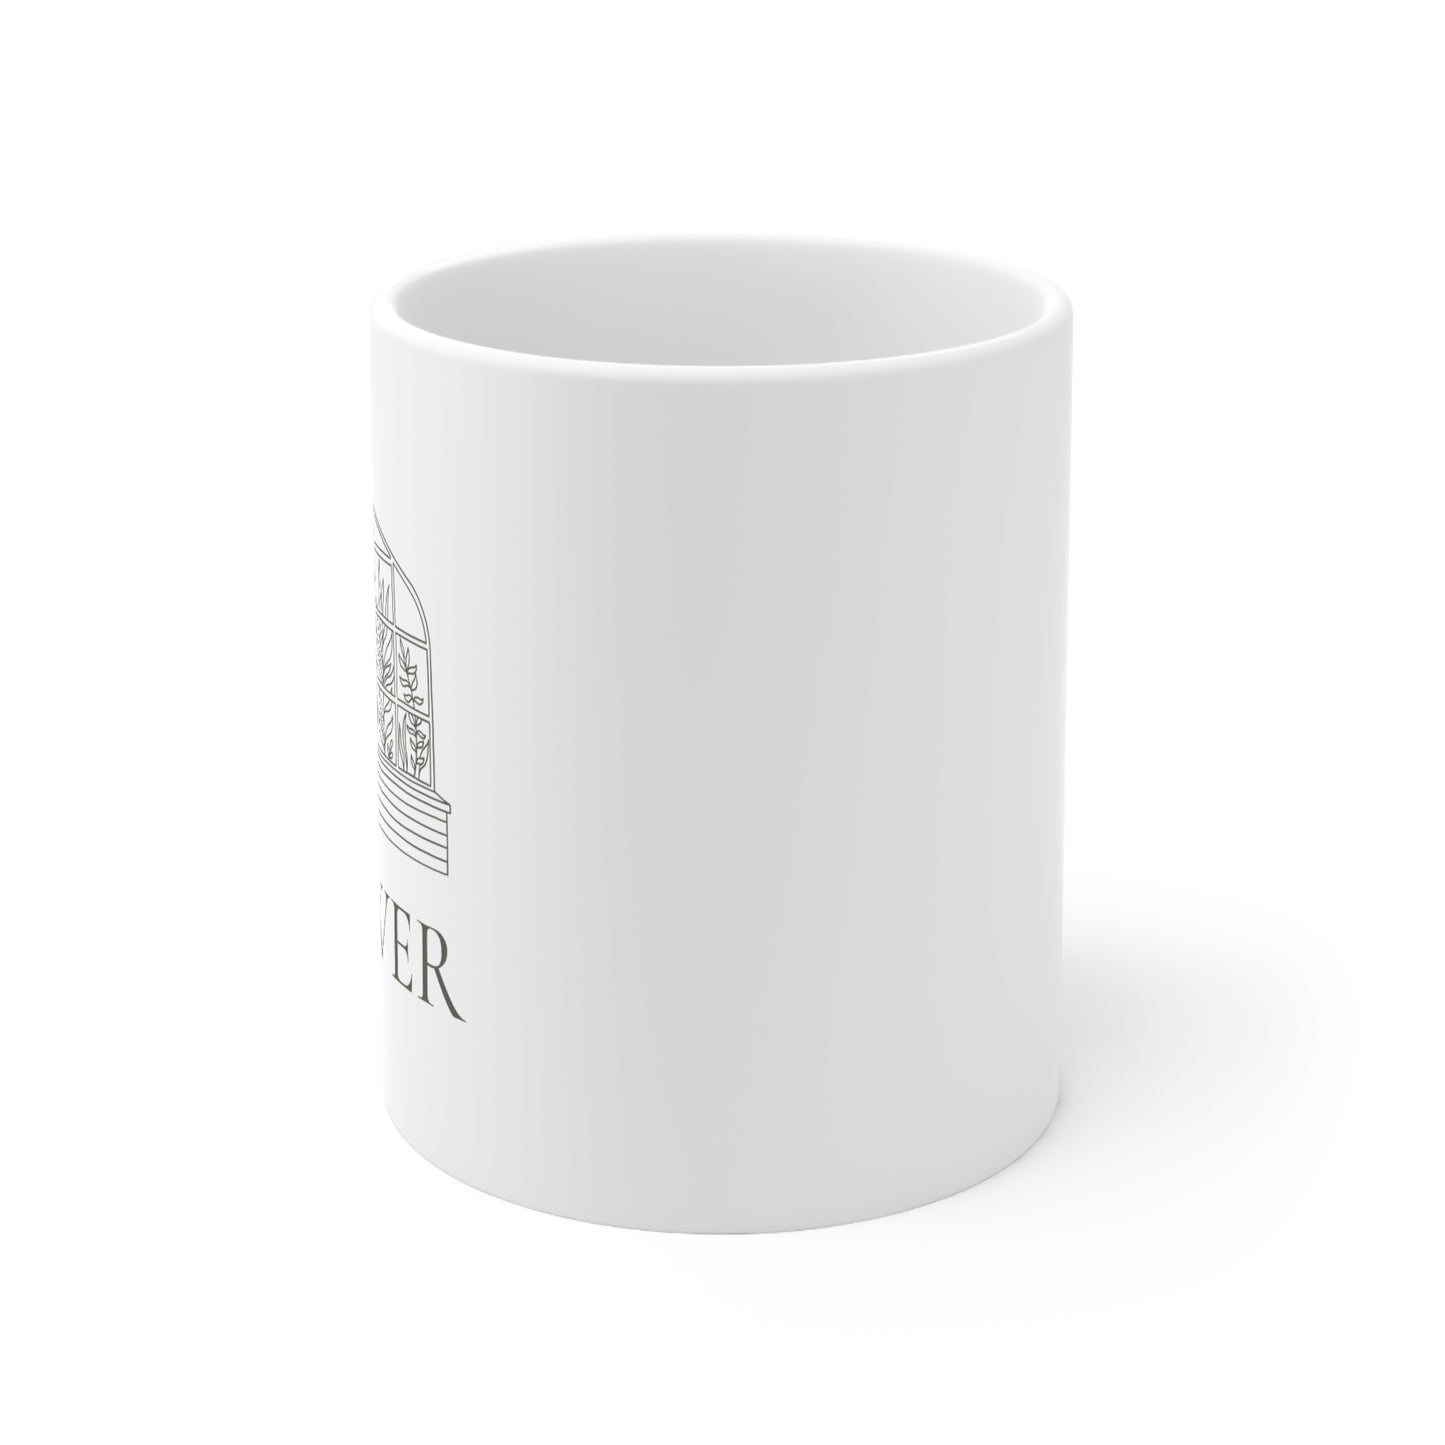 Grower Ceramic Mug 11oz